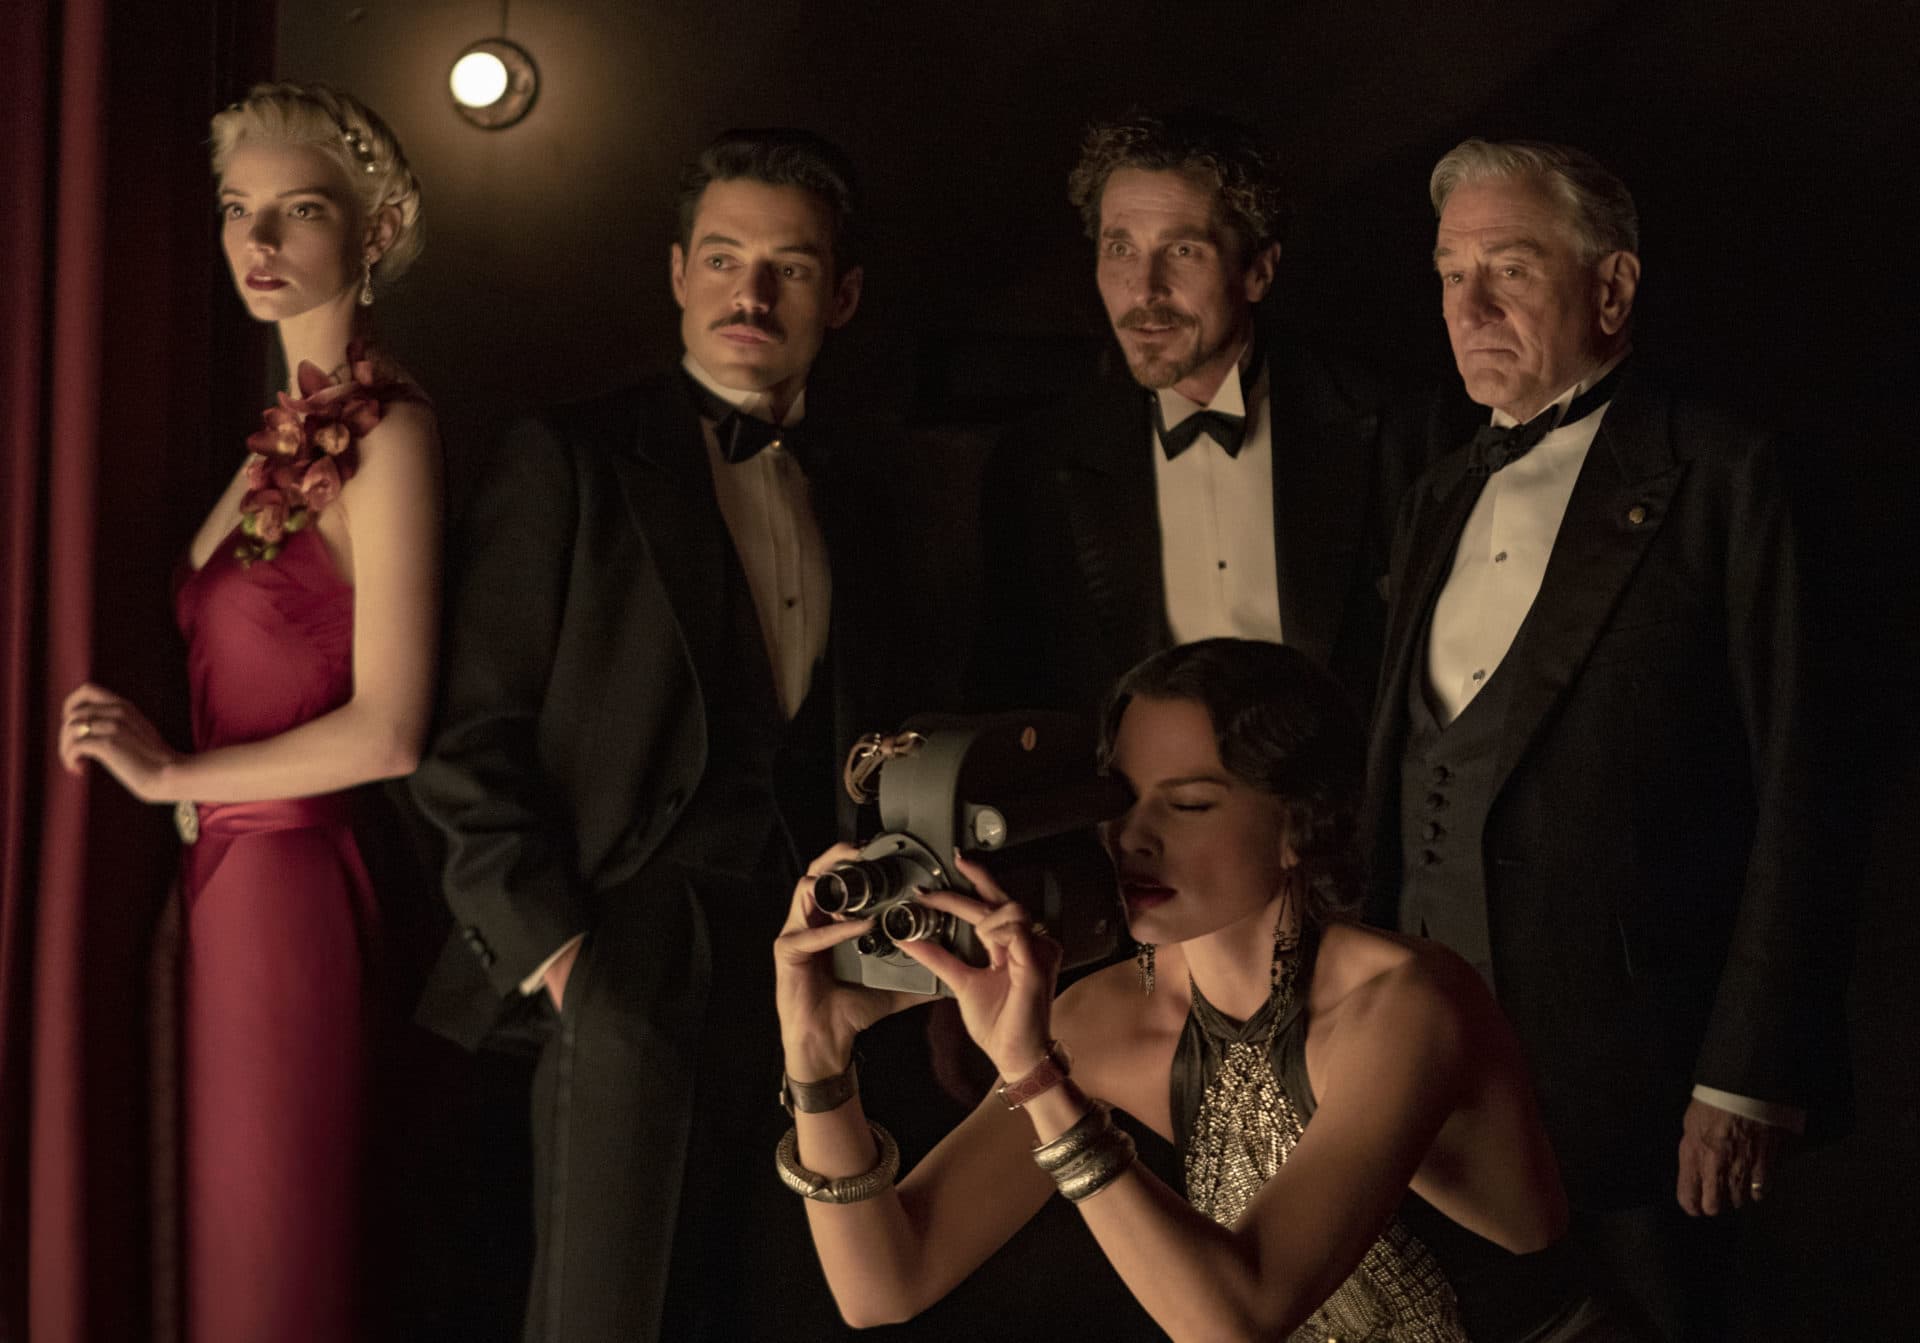 Left to right: Anya Taylor-Joy as Libby, Rami Malek as Tom, Christian Bale as Burt, Robert De Niro as Gil, and Margot Robbie as Valerie 